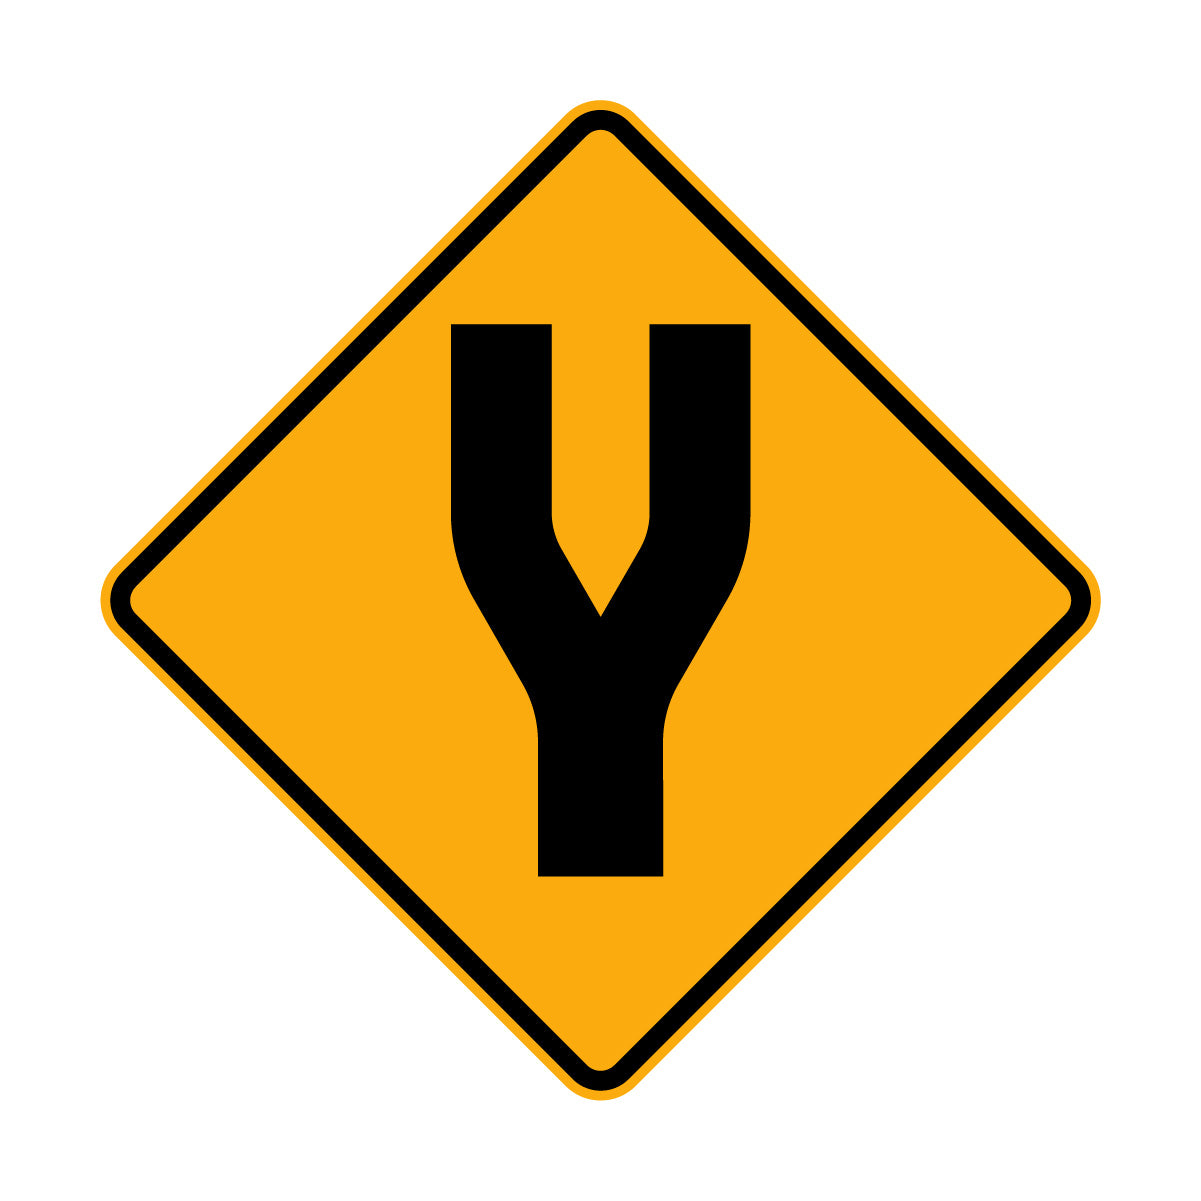 Warning: Start Divided Road Sign